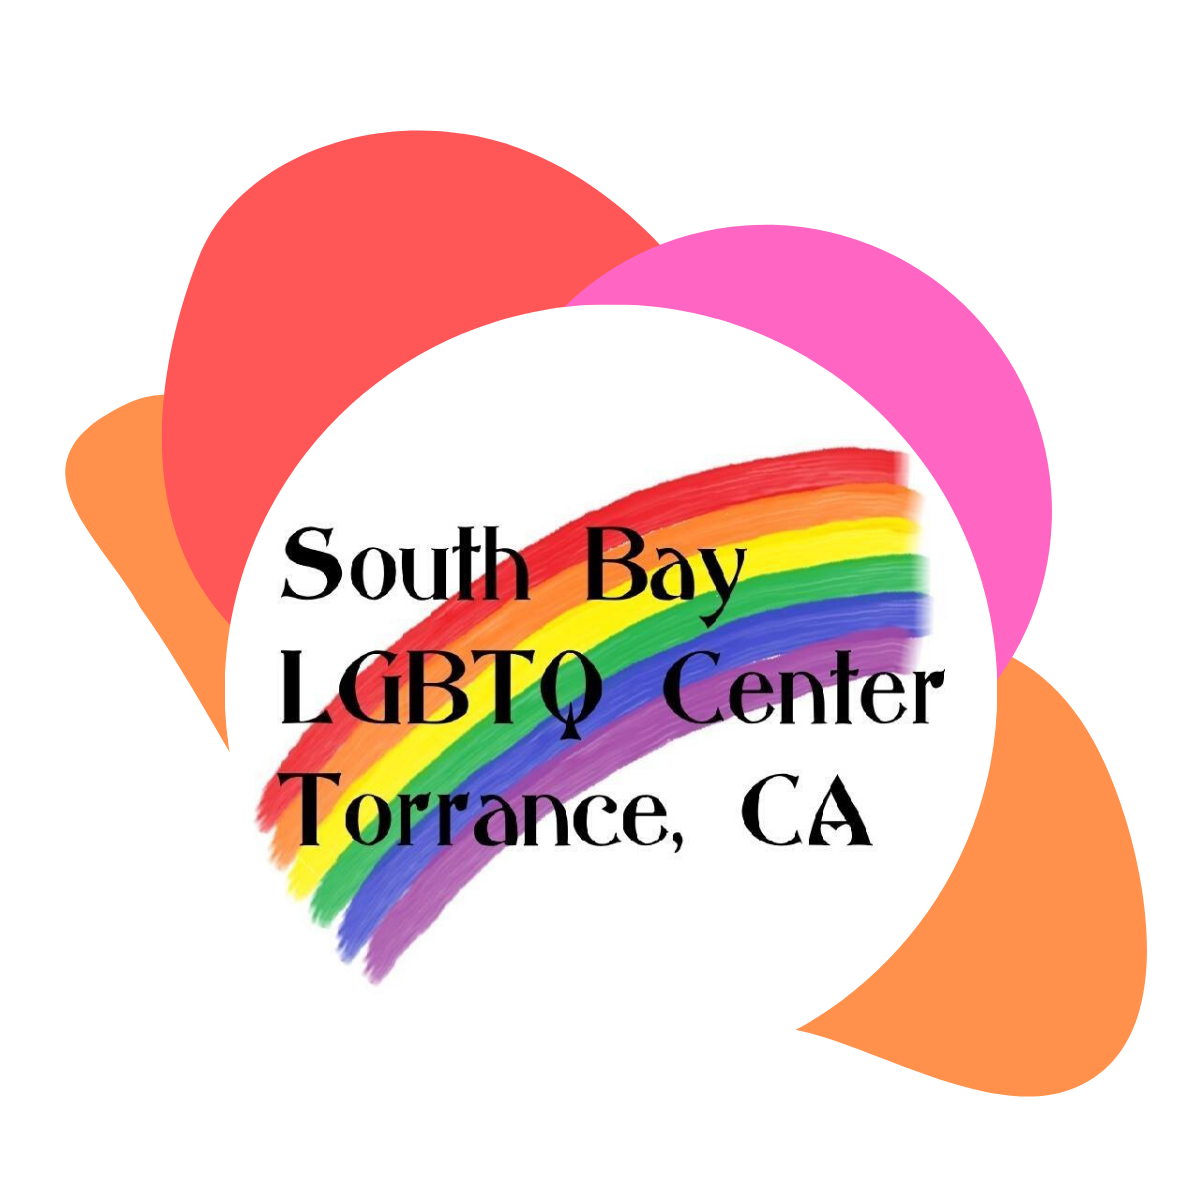 LGBTQ Organization in Los Angeles California - South Bay LGBTQ Center